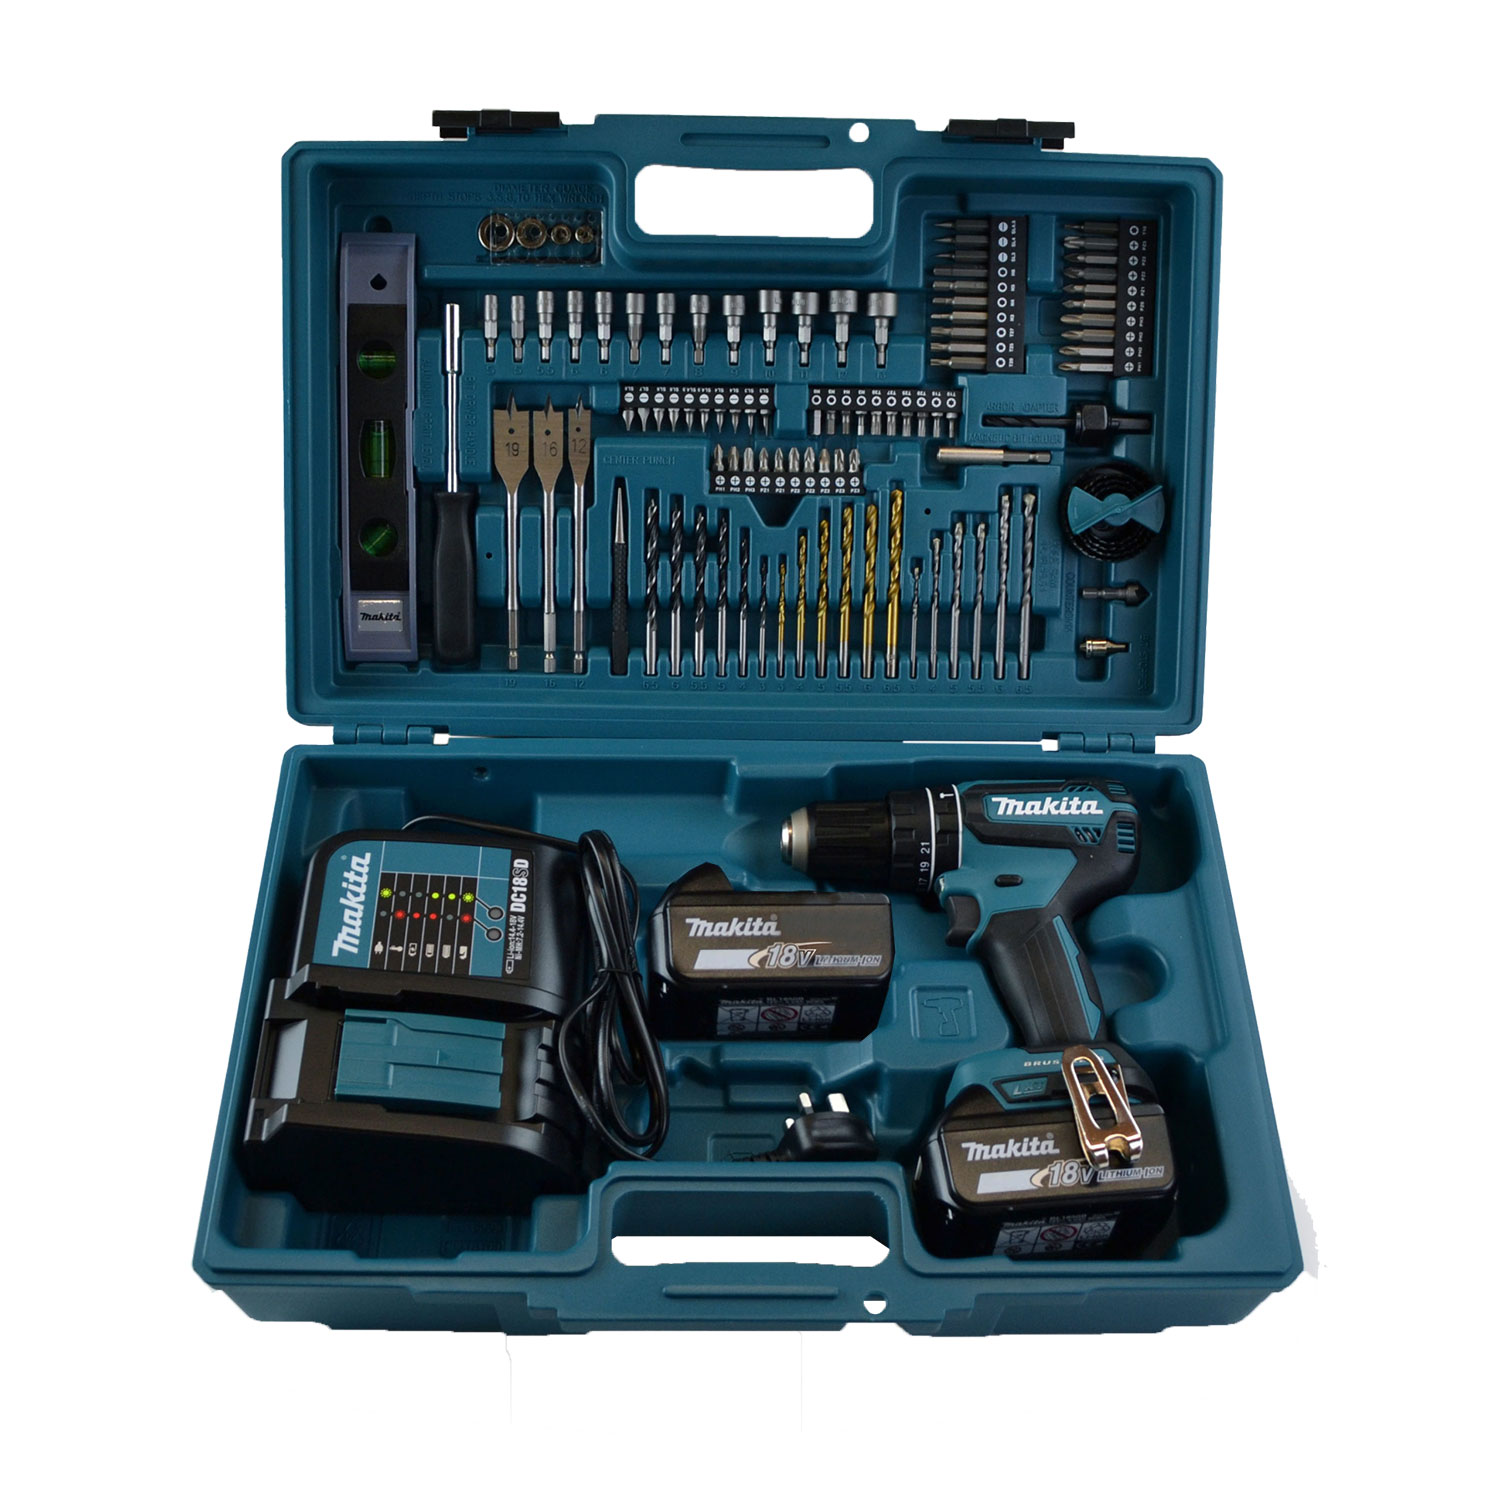 Schrijft een rapport groep Ongemak Makita 18v Brushless Combi Drill Kit 101 Piece Accessory Set In Case |  sdr.com.ec